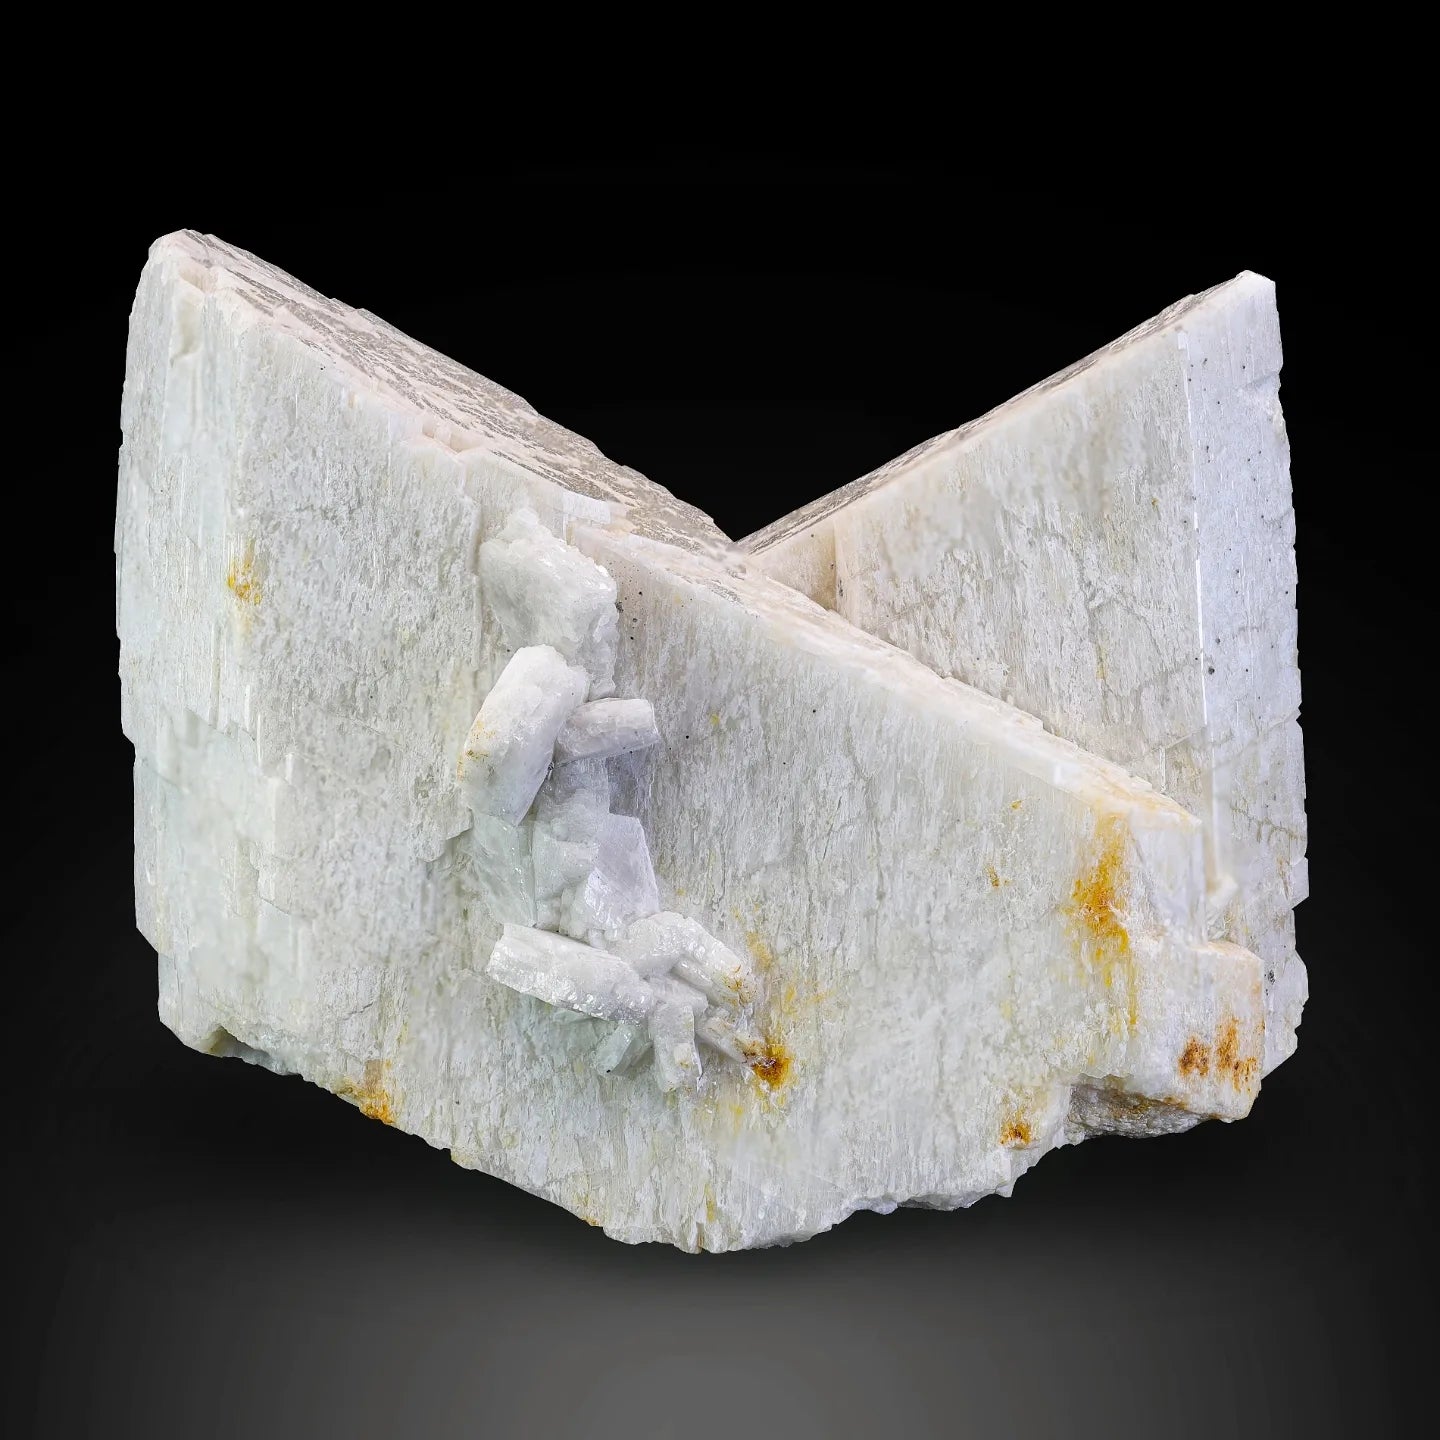 The Exfoliating Mineral Twinned Microcline Feldspar Crystal from Pakistan